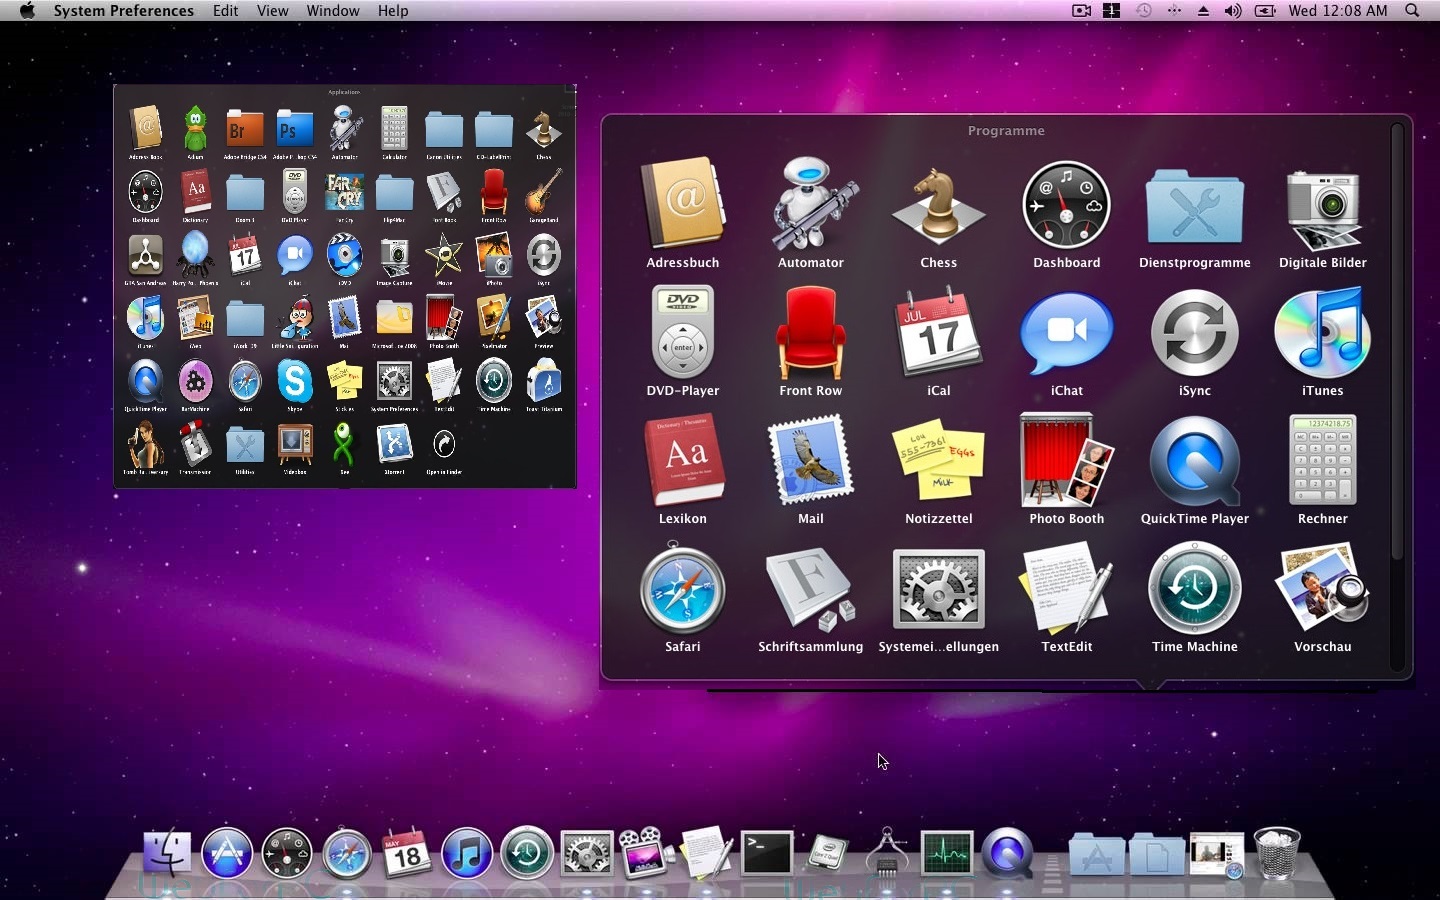 Mac Os Leopard Free Download